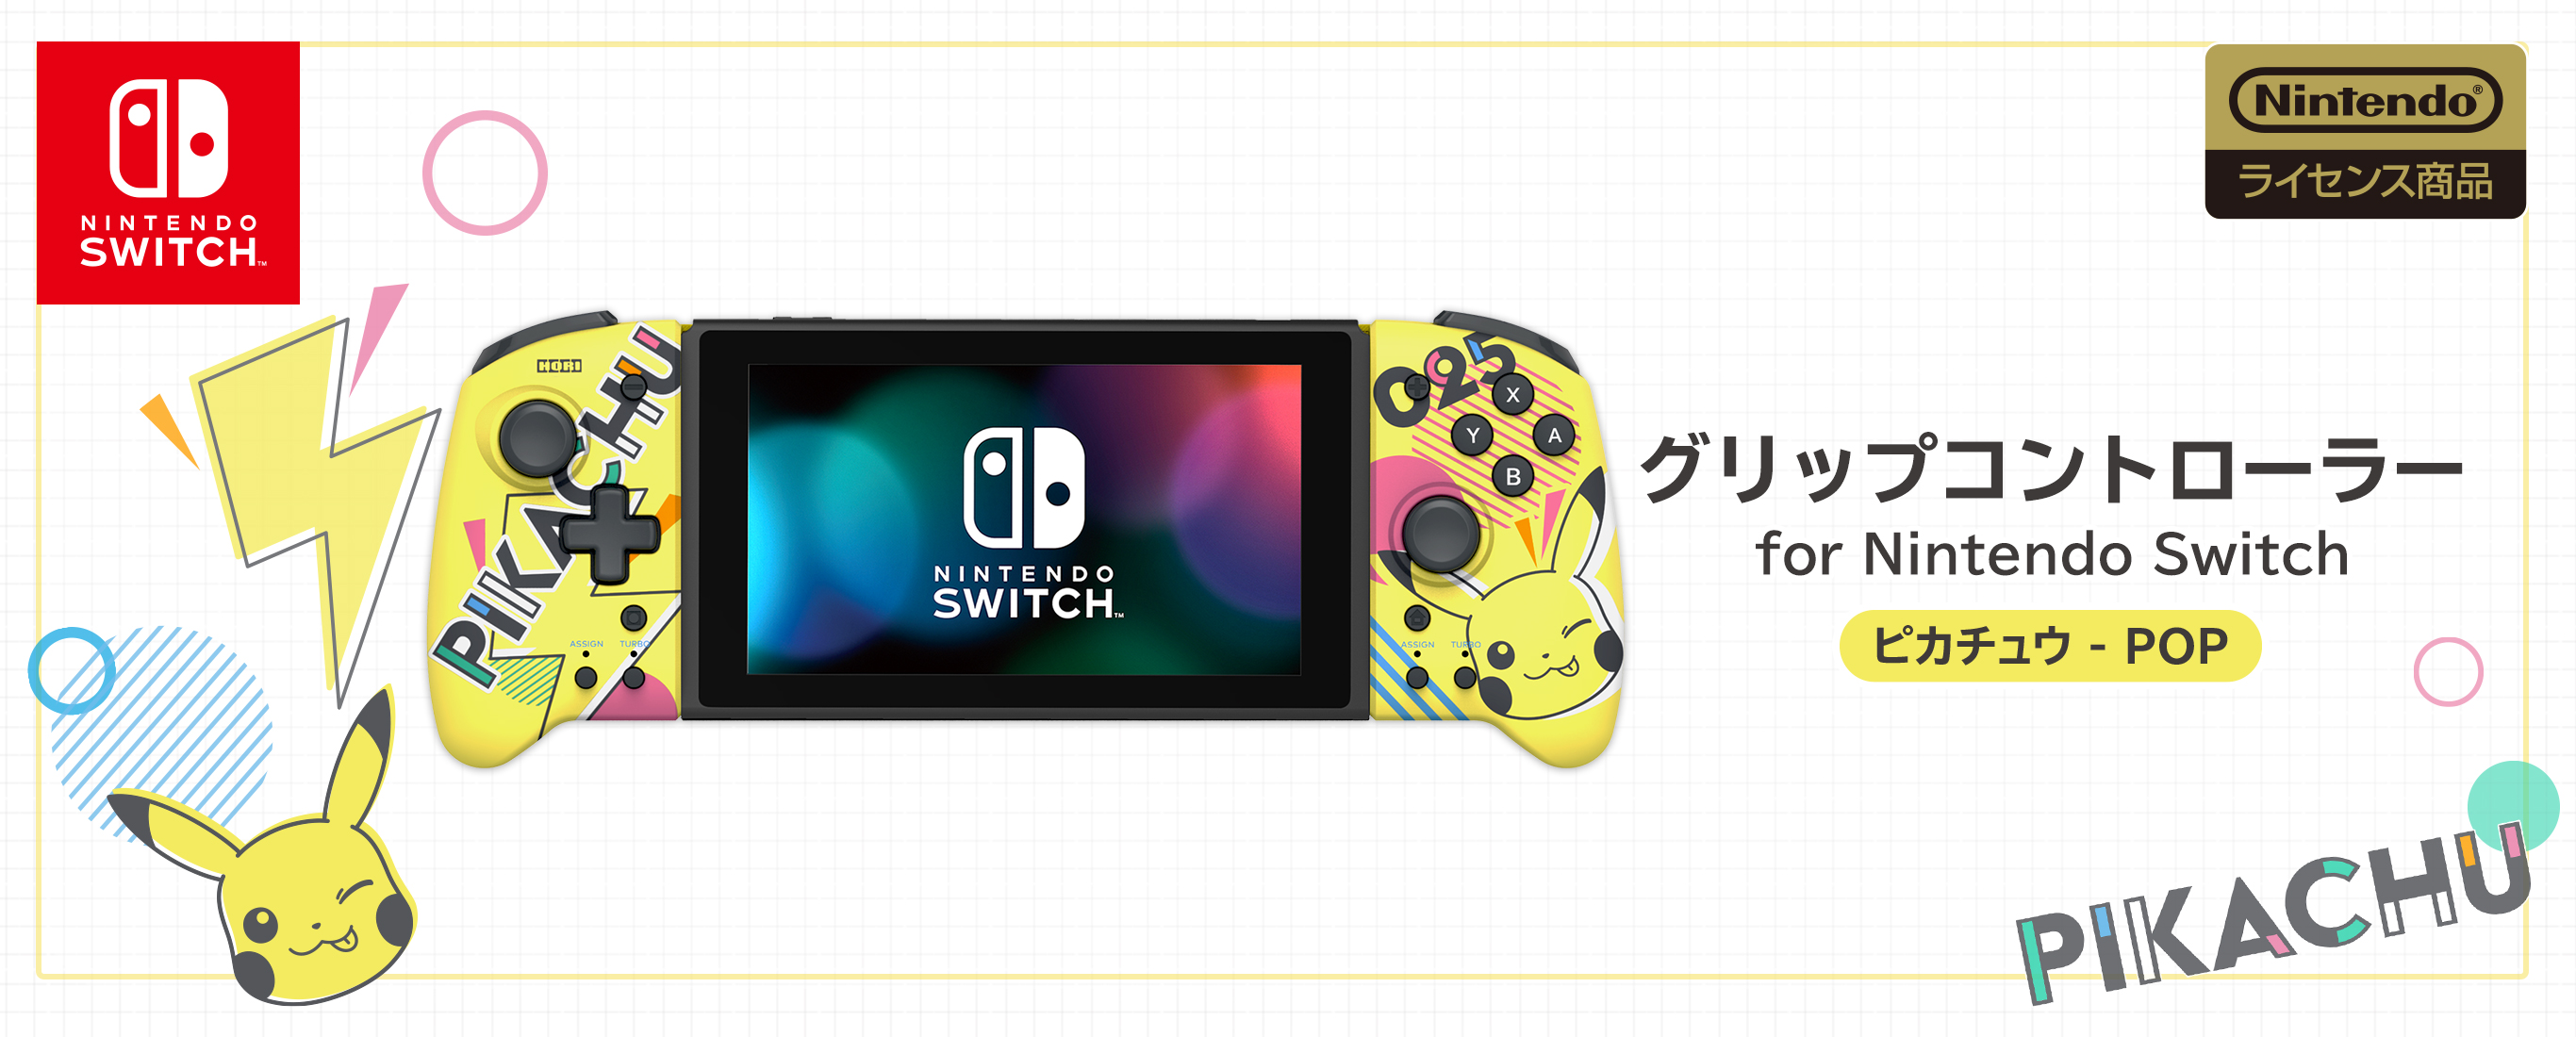 Nintendo Switch 本体 ピカチュウデザイン